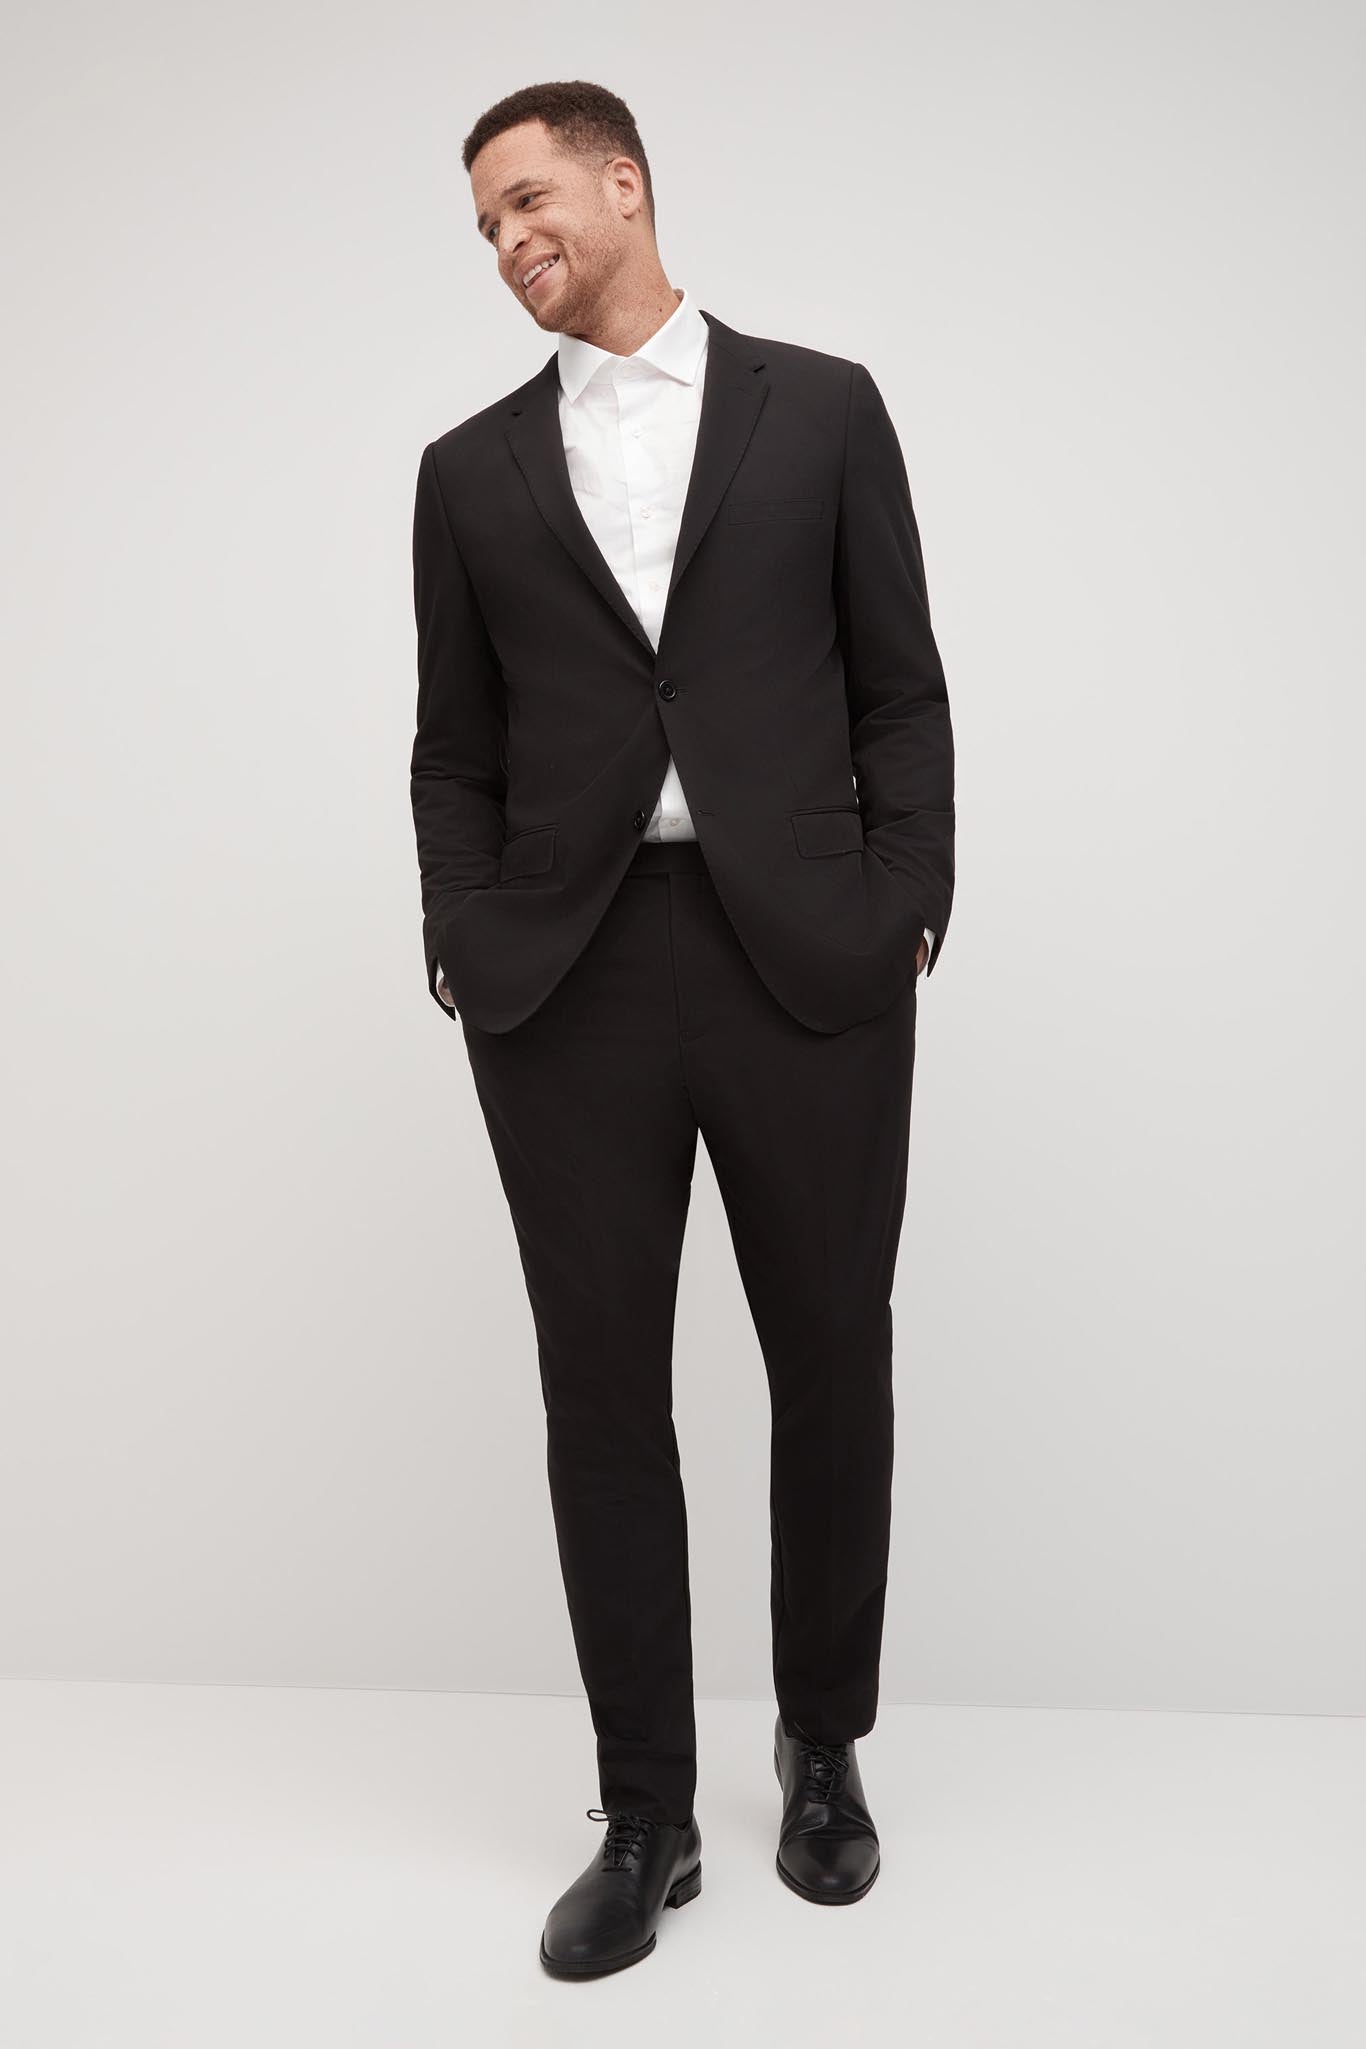 Fashion Men's Formal Dress Suit Vest Slim Business Waistcoat Sleeveless  Jackets | eBay